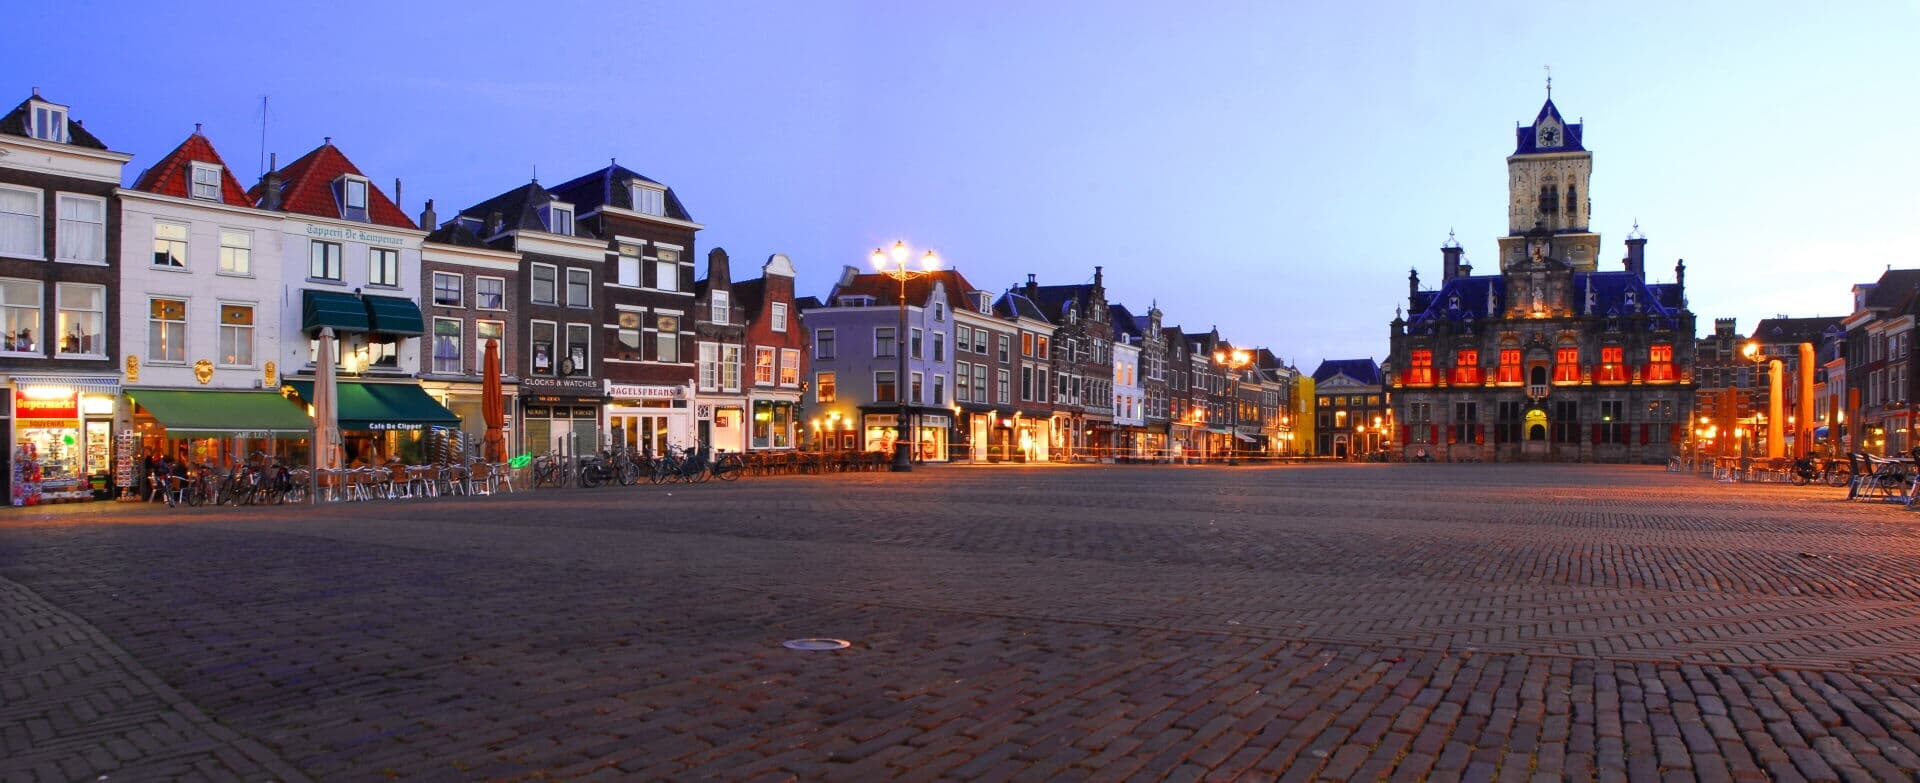 Delft Photo high res